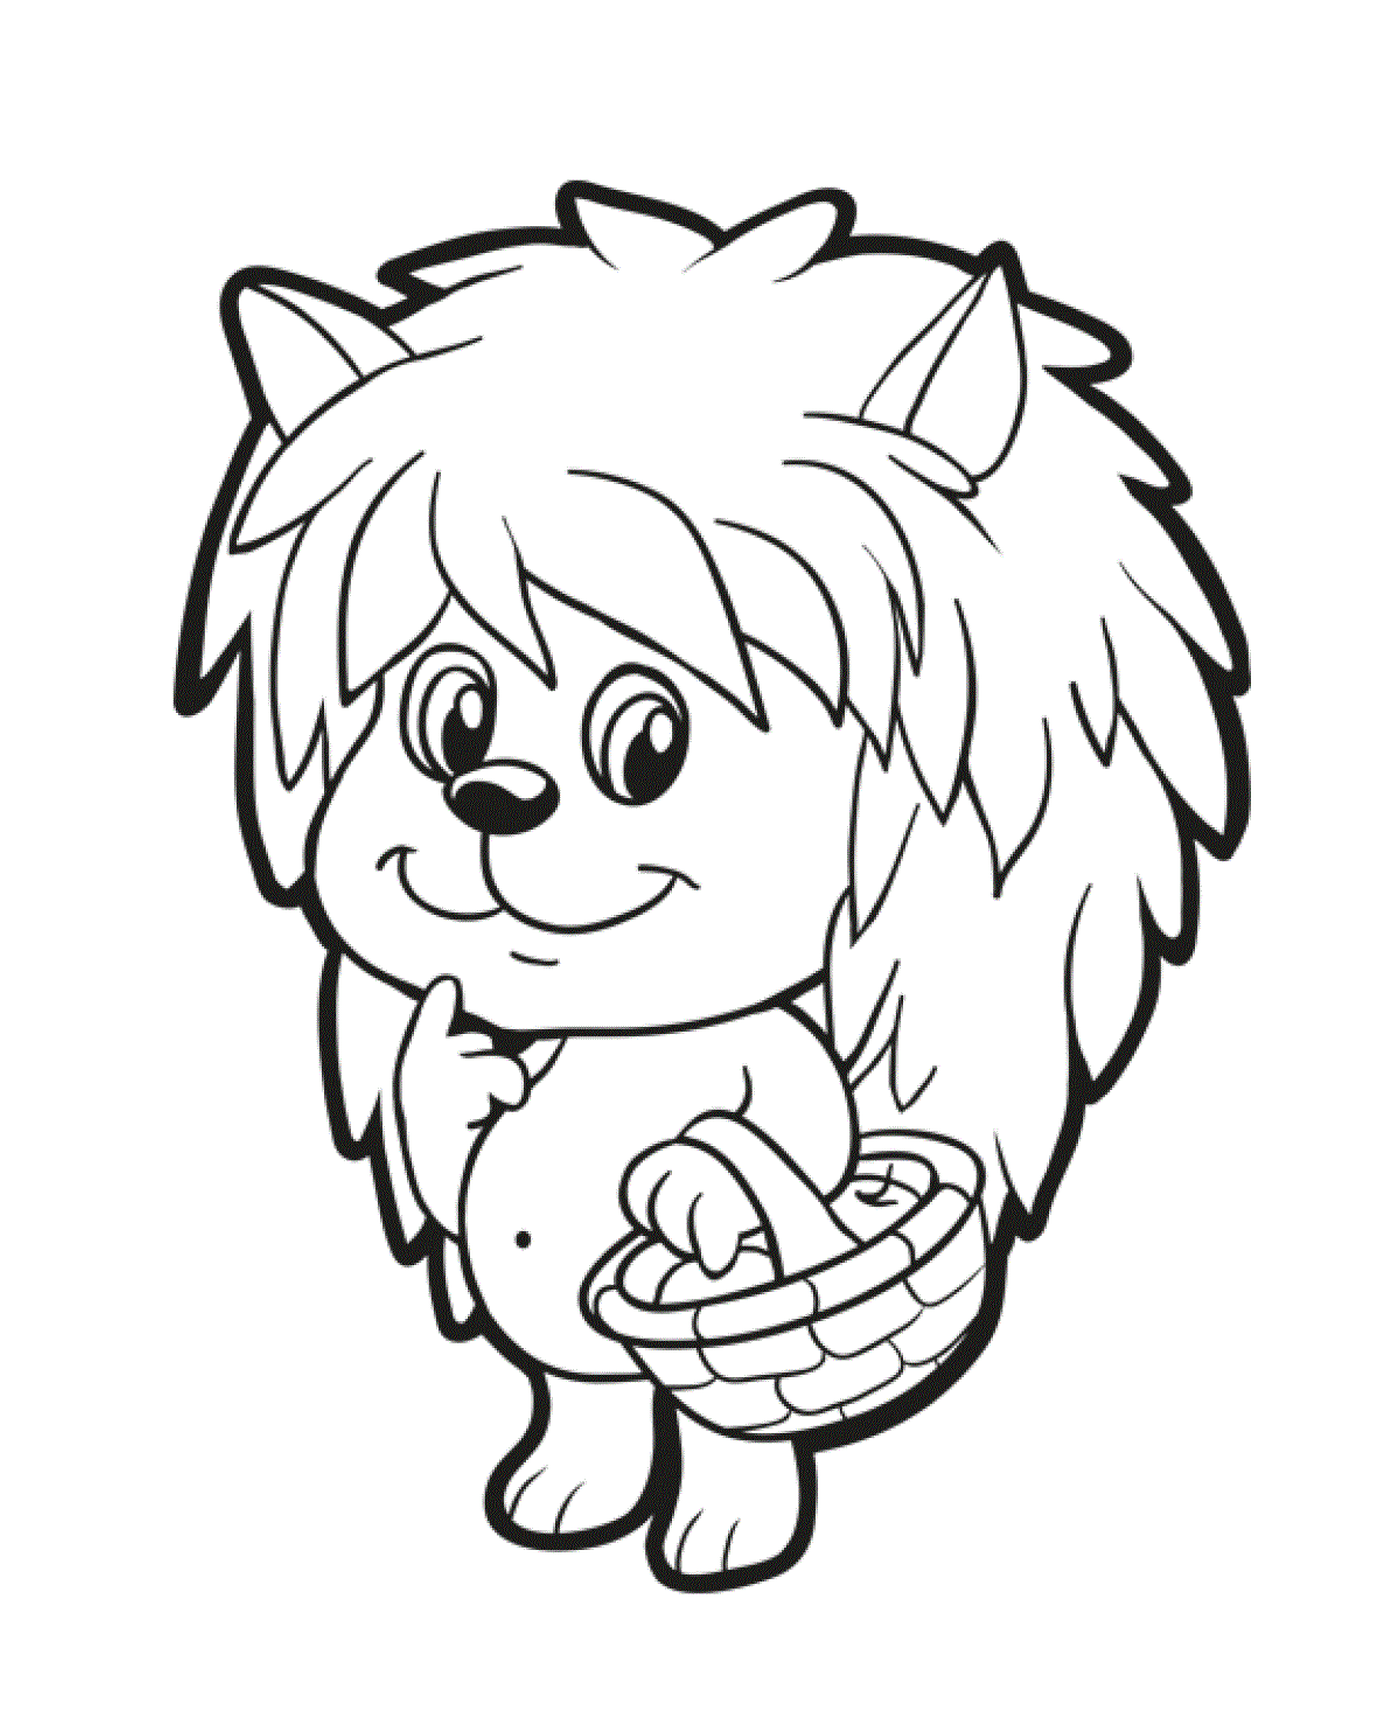  Nice little hedgehog with a basket of apples 